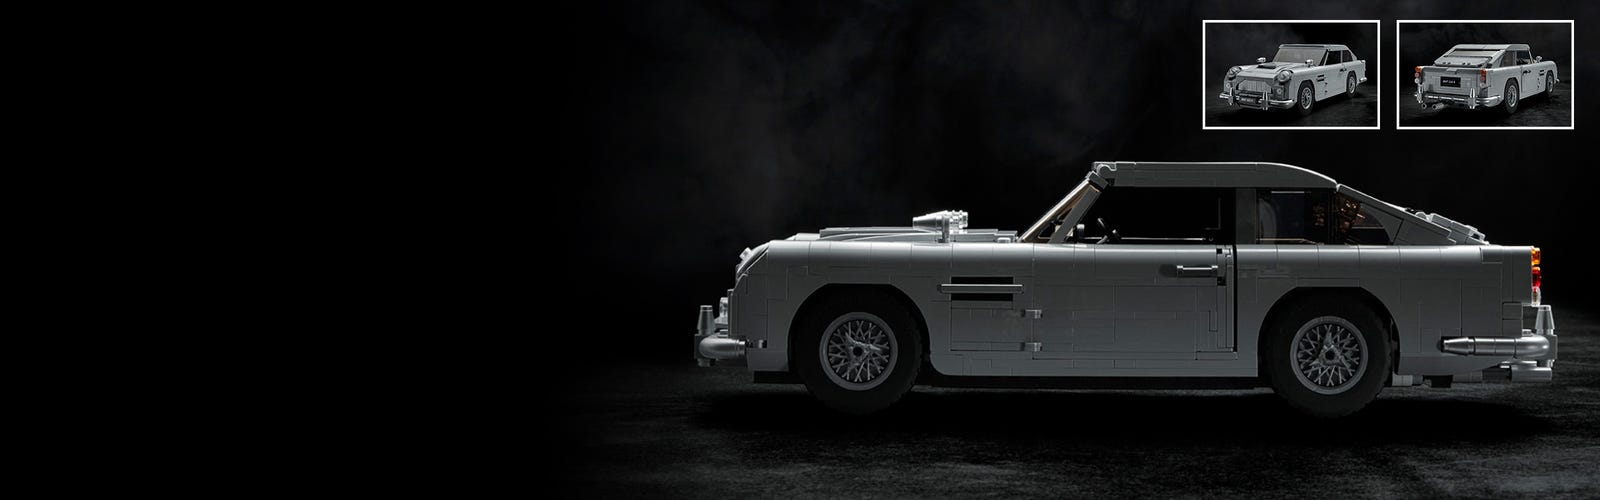  LEGO 10262 Creator Expert James Bond Aston Martin DB5